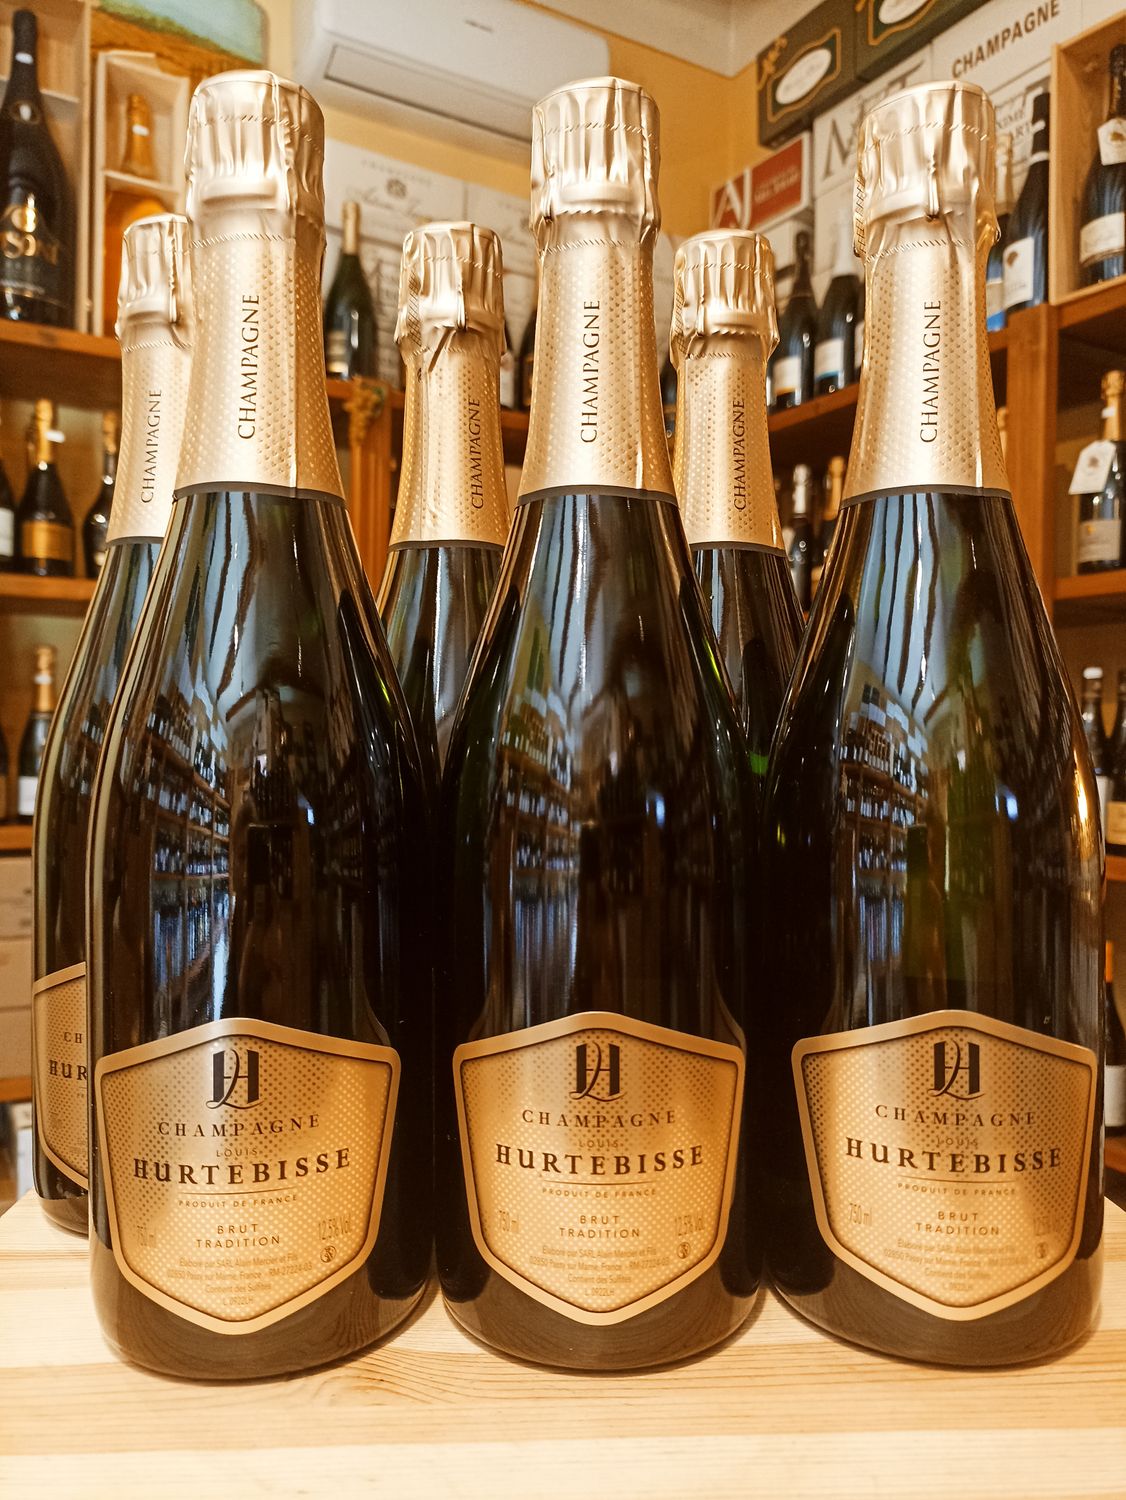 Champagne Louis Hurtebisse Brut Tradition - r.m. Passy sur Marne (France) - 0,75 L x 6 bottiglie